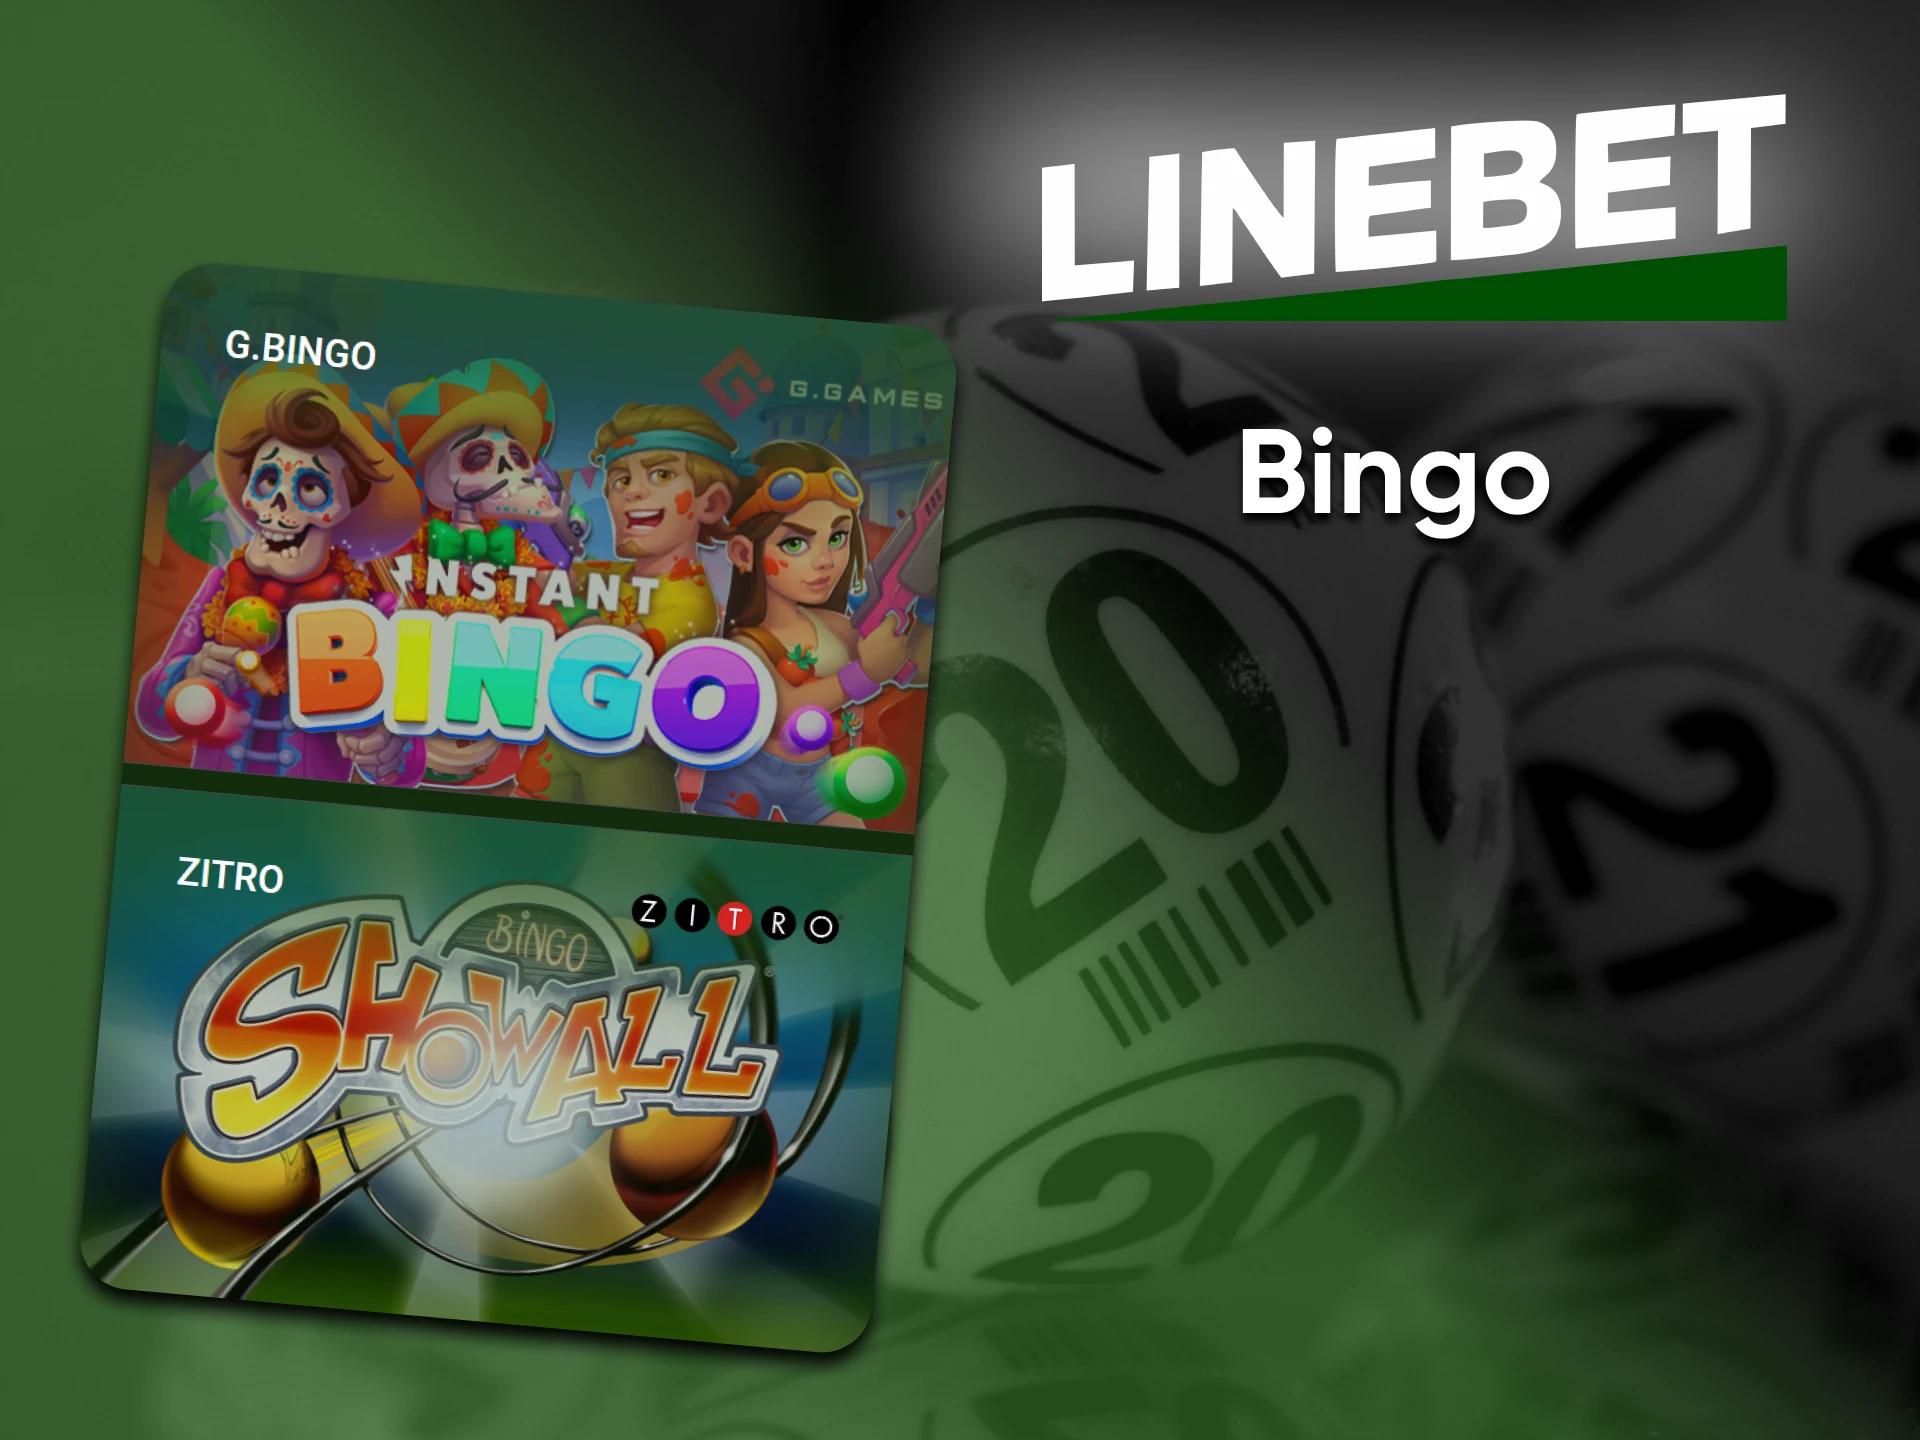 At Linebet casino you can play Bingo.